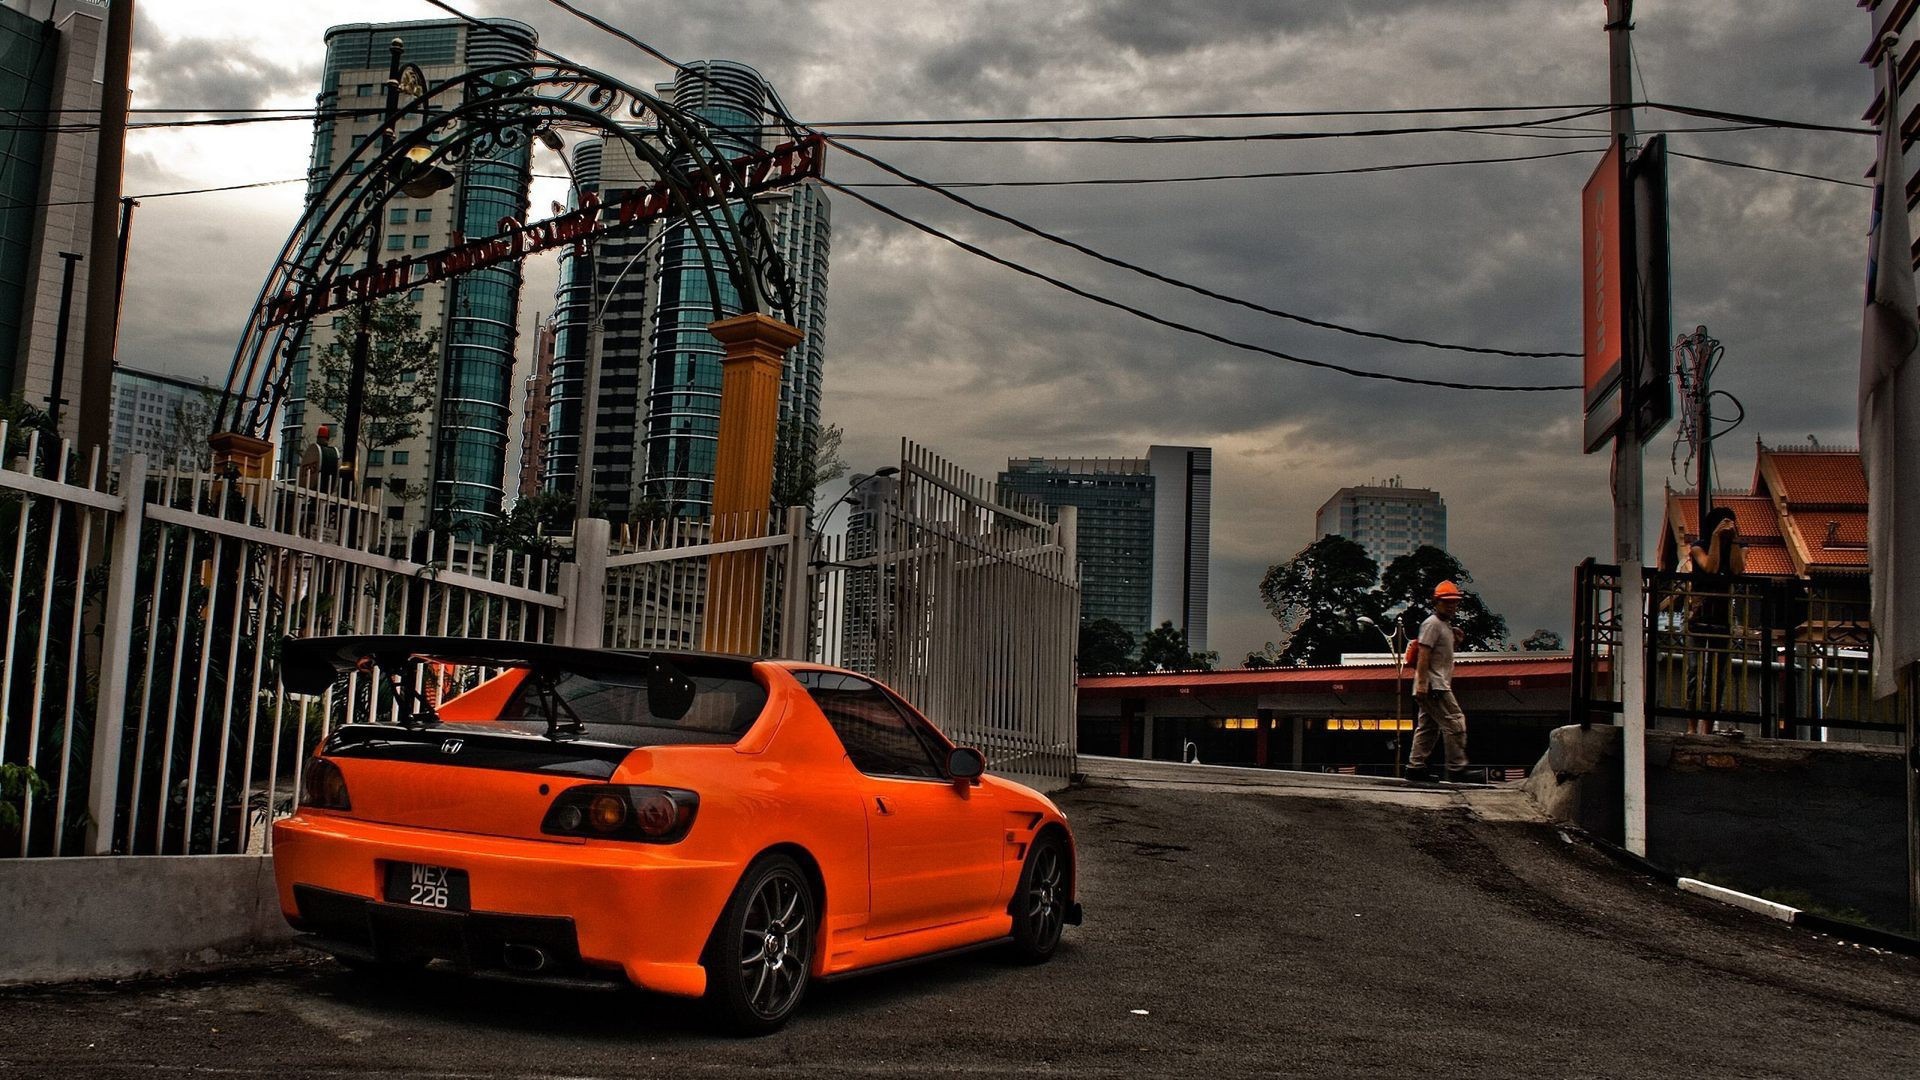 Orange Honda parked in the city